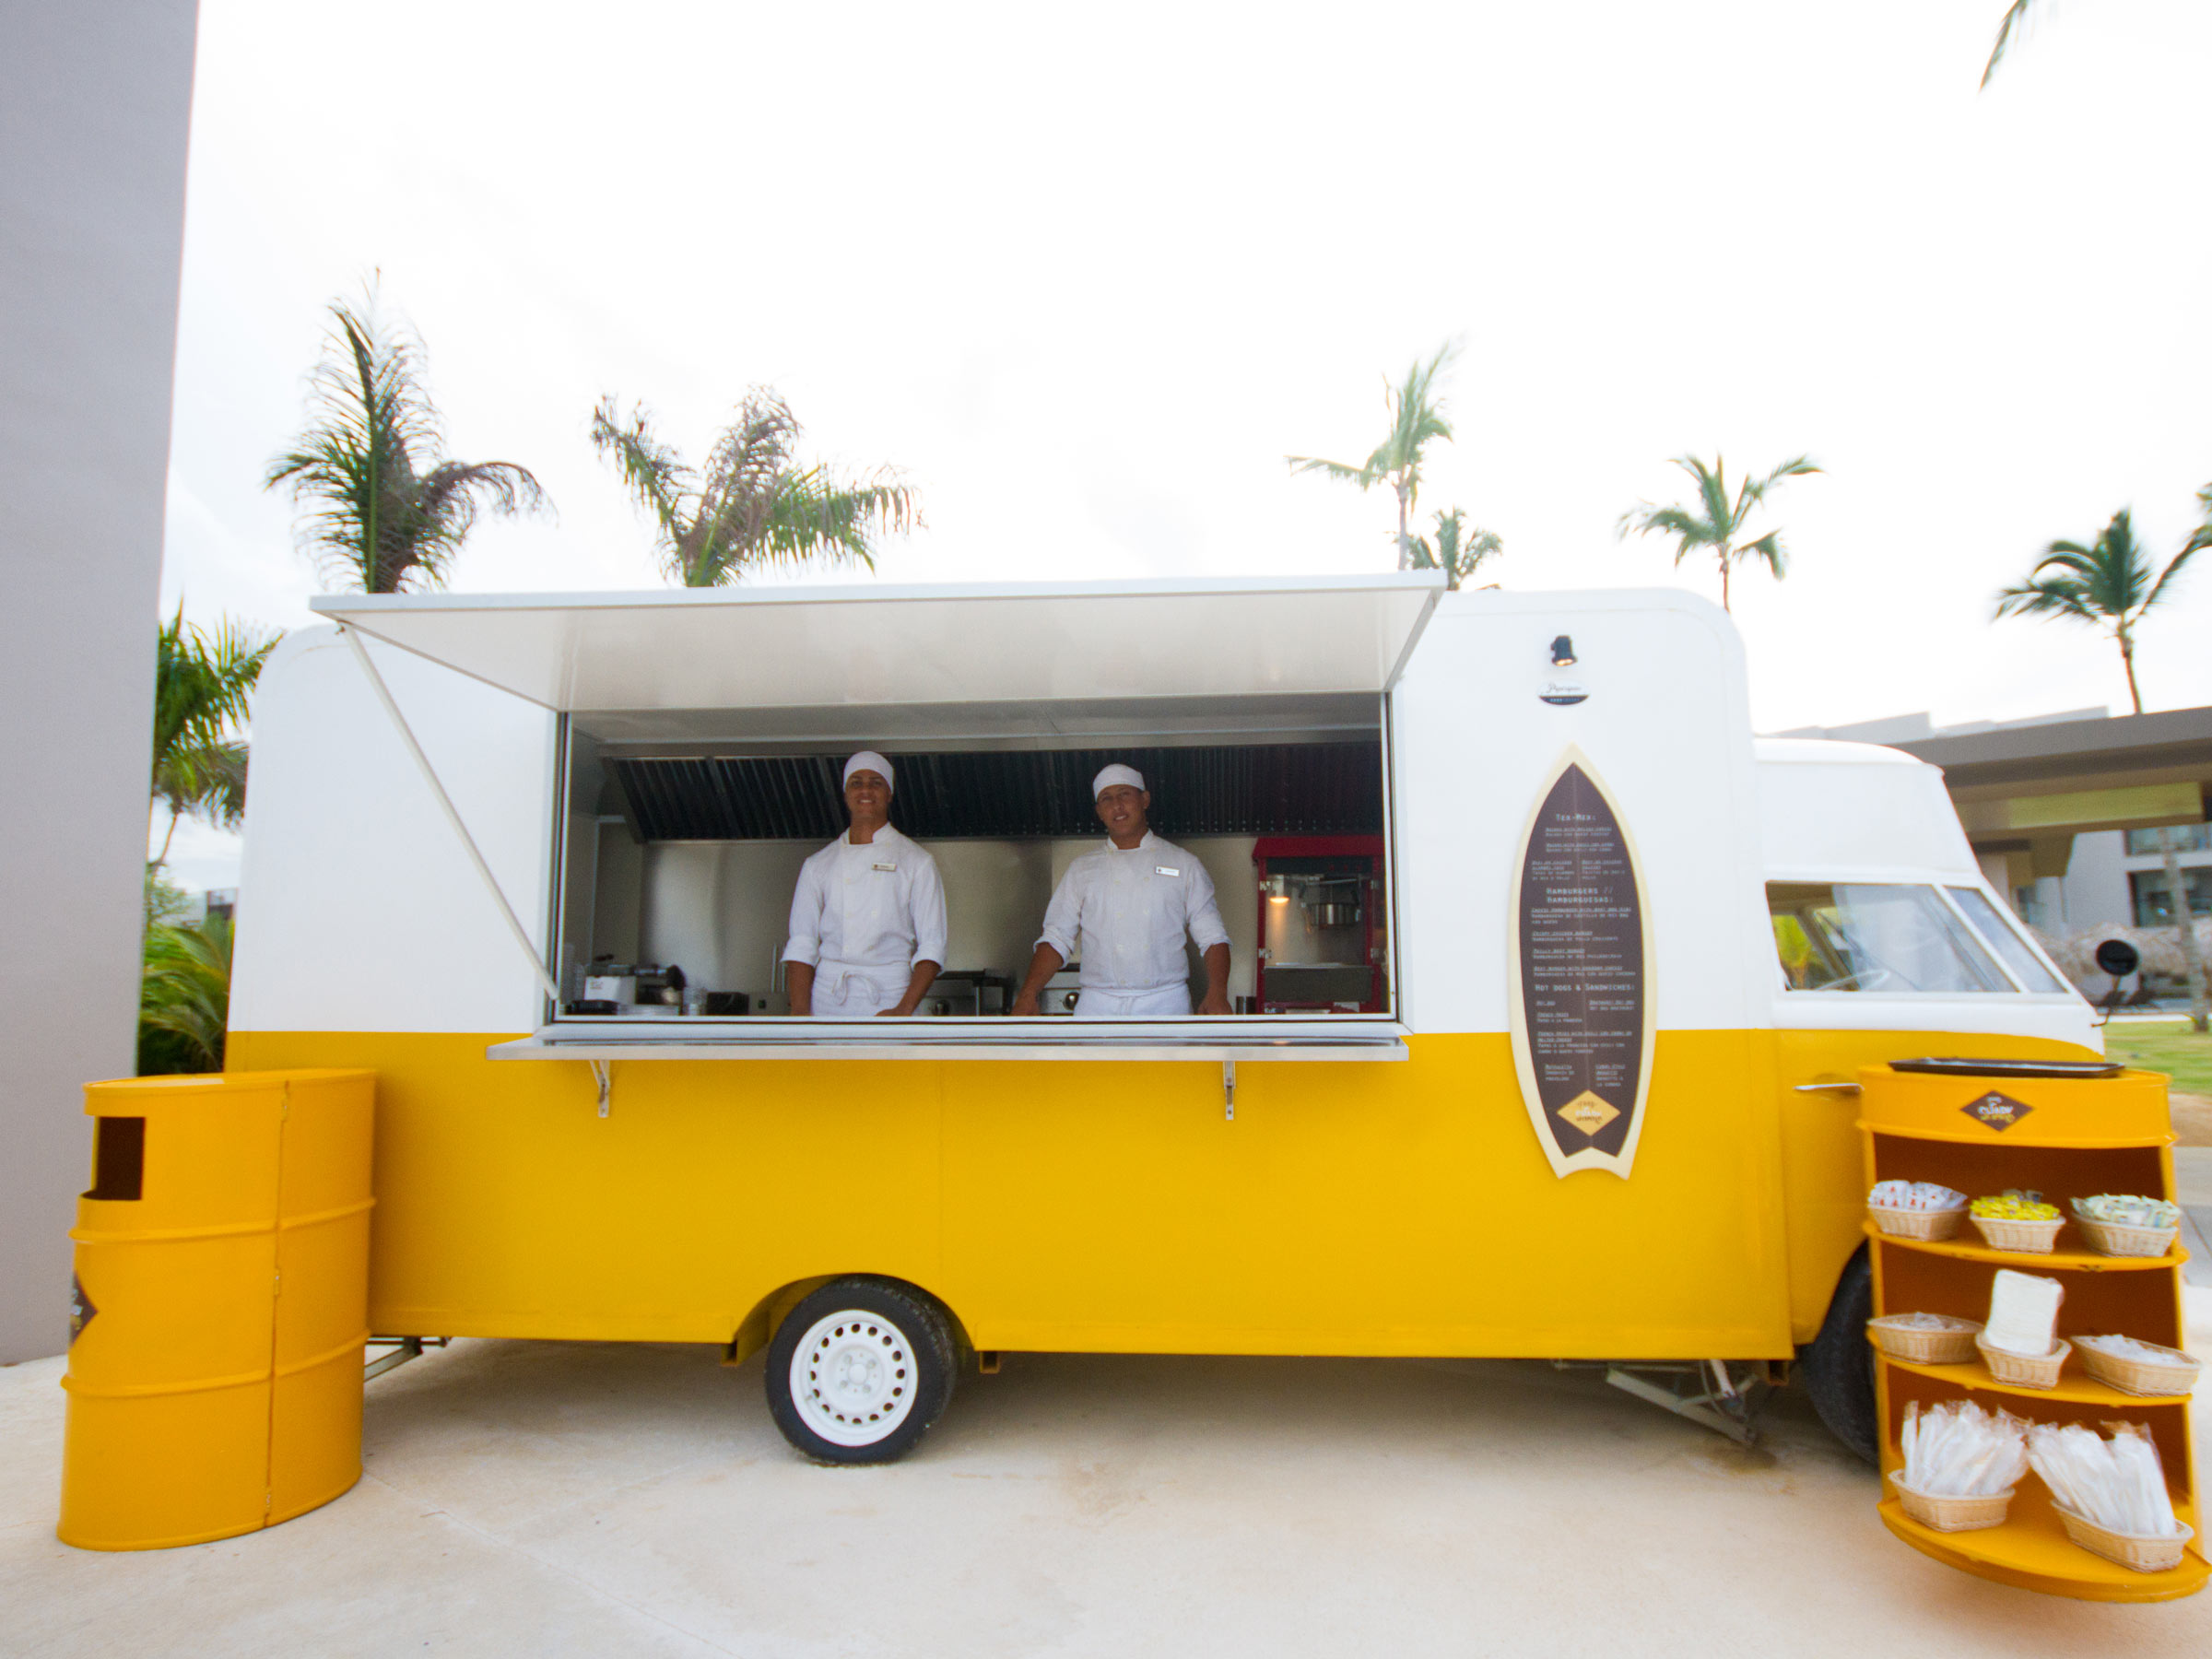  All Inclusive Resort Food Truck in the Dominican Republic